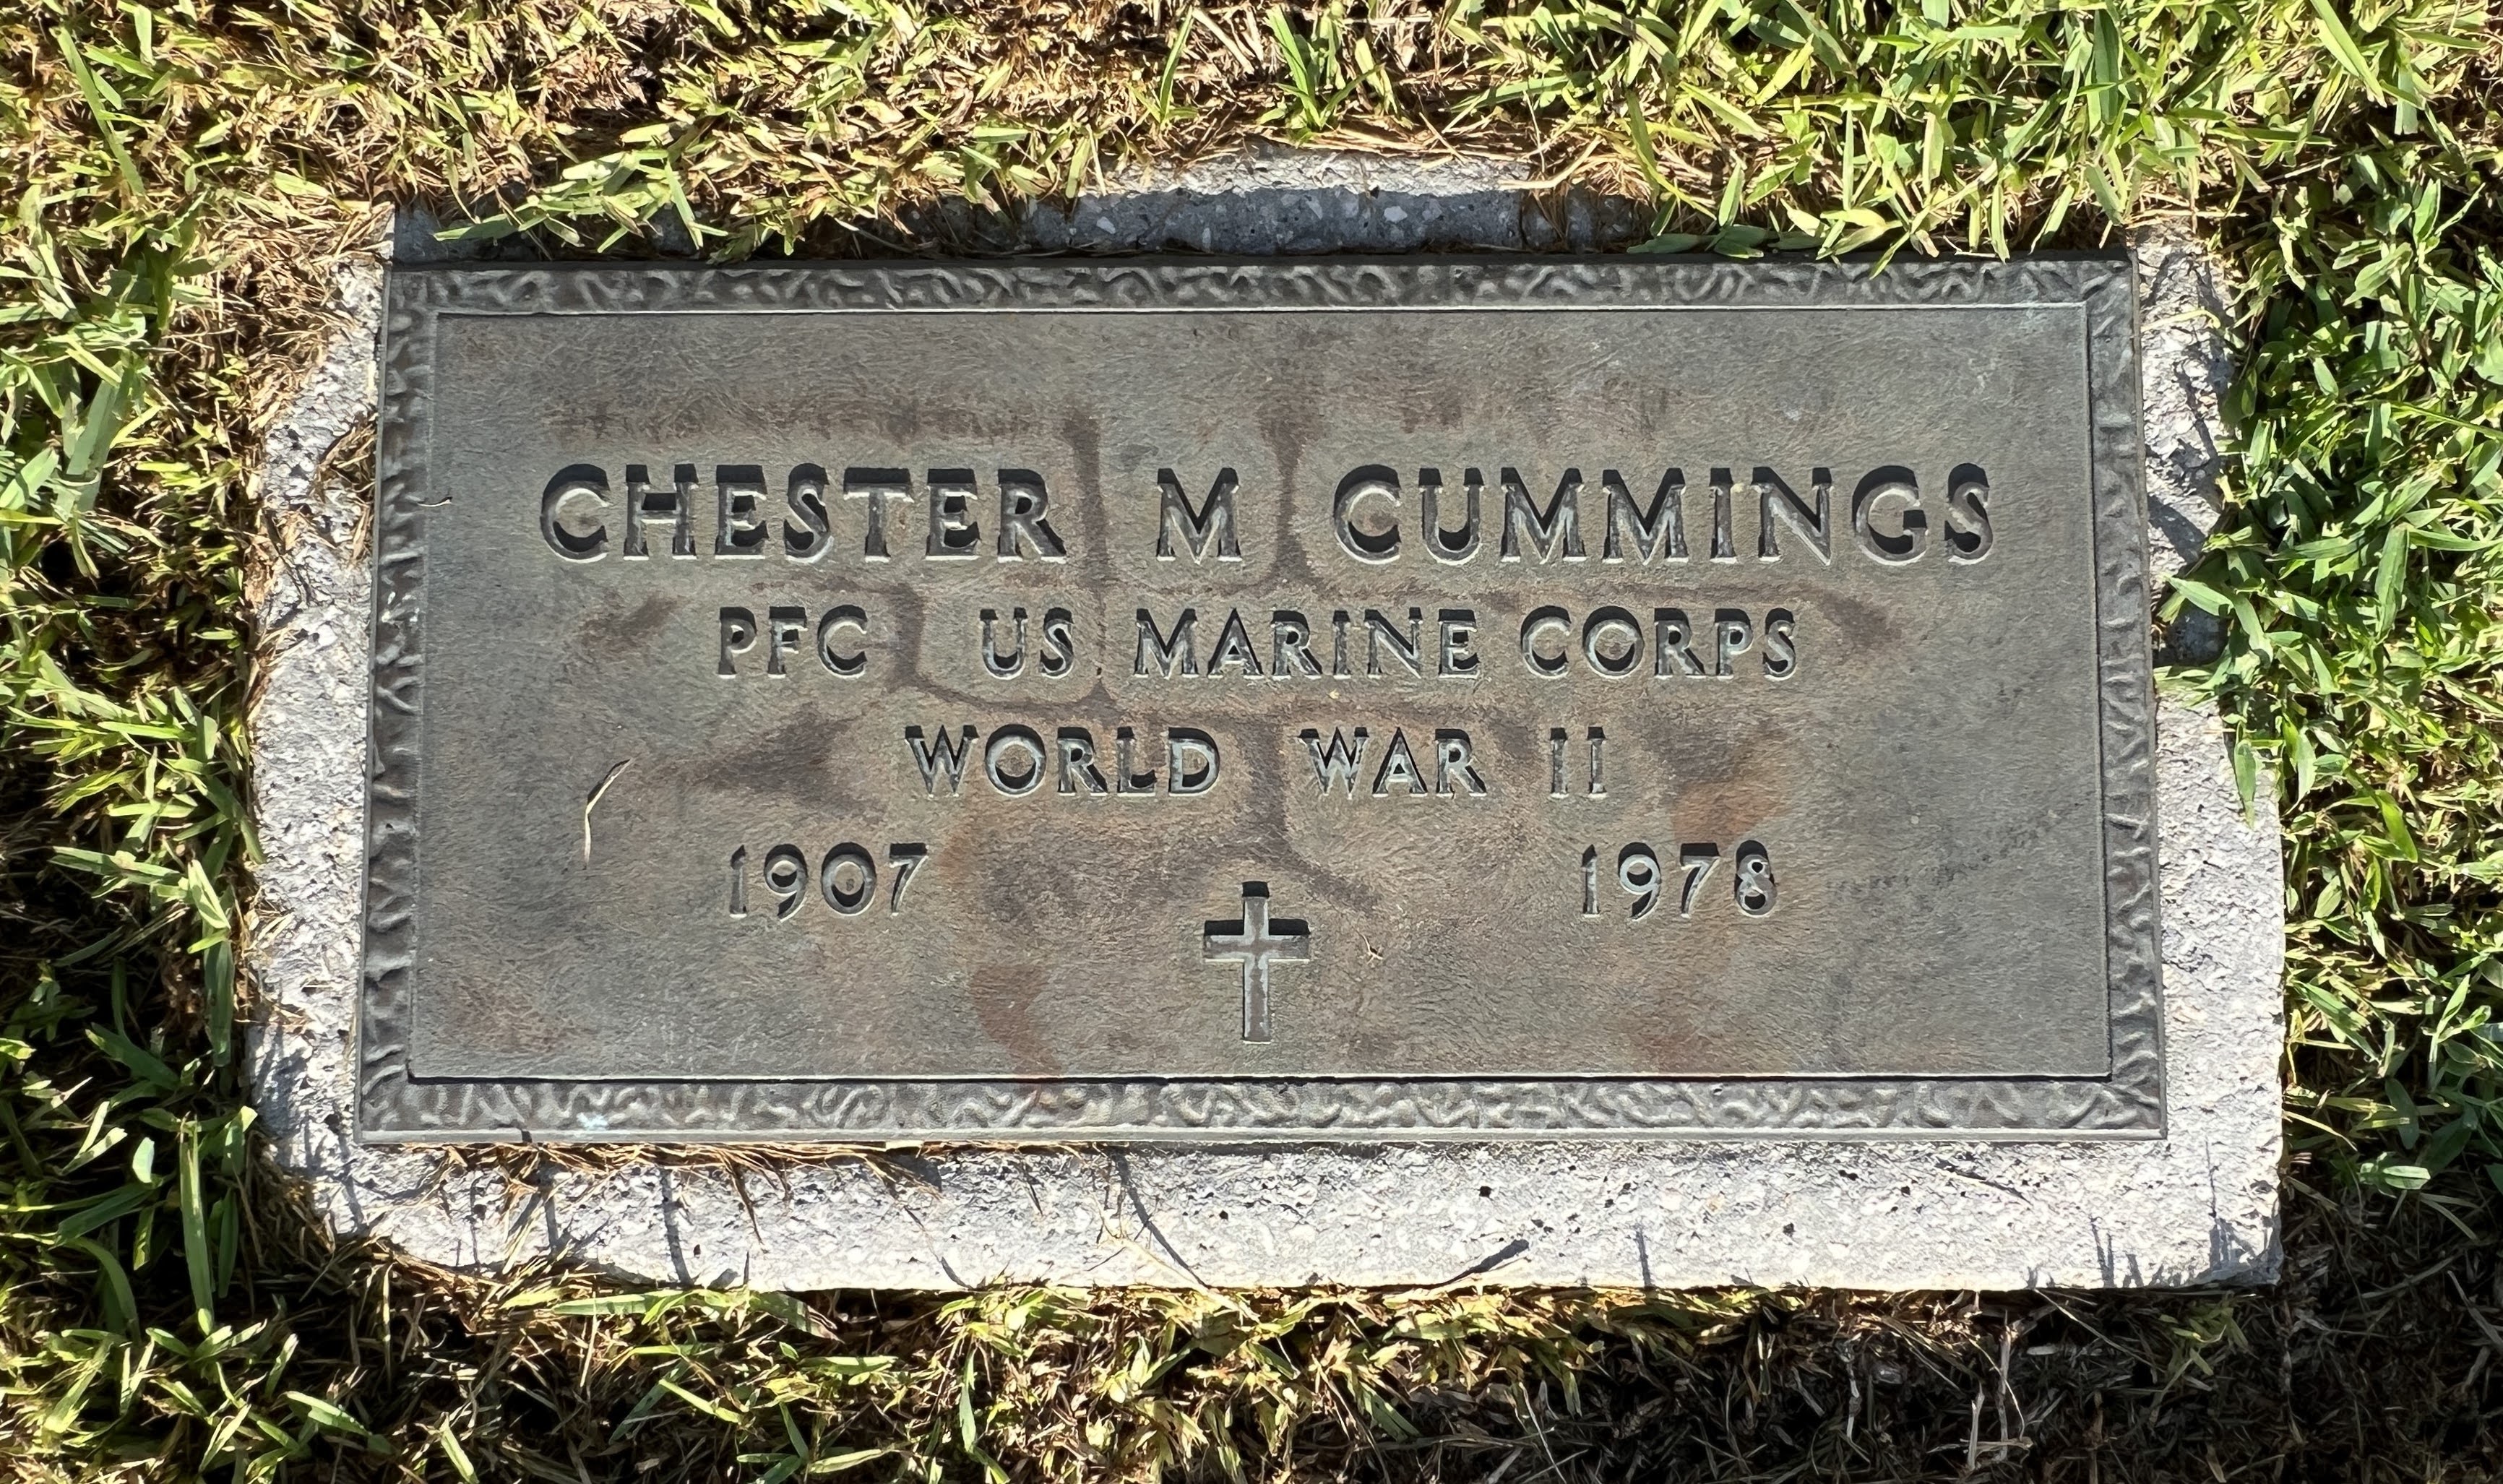 PFC Chester M Cummings